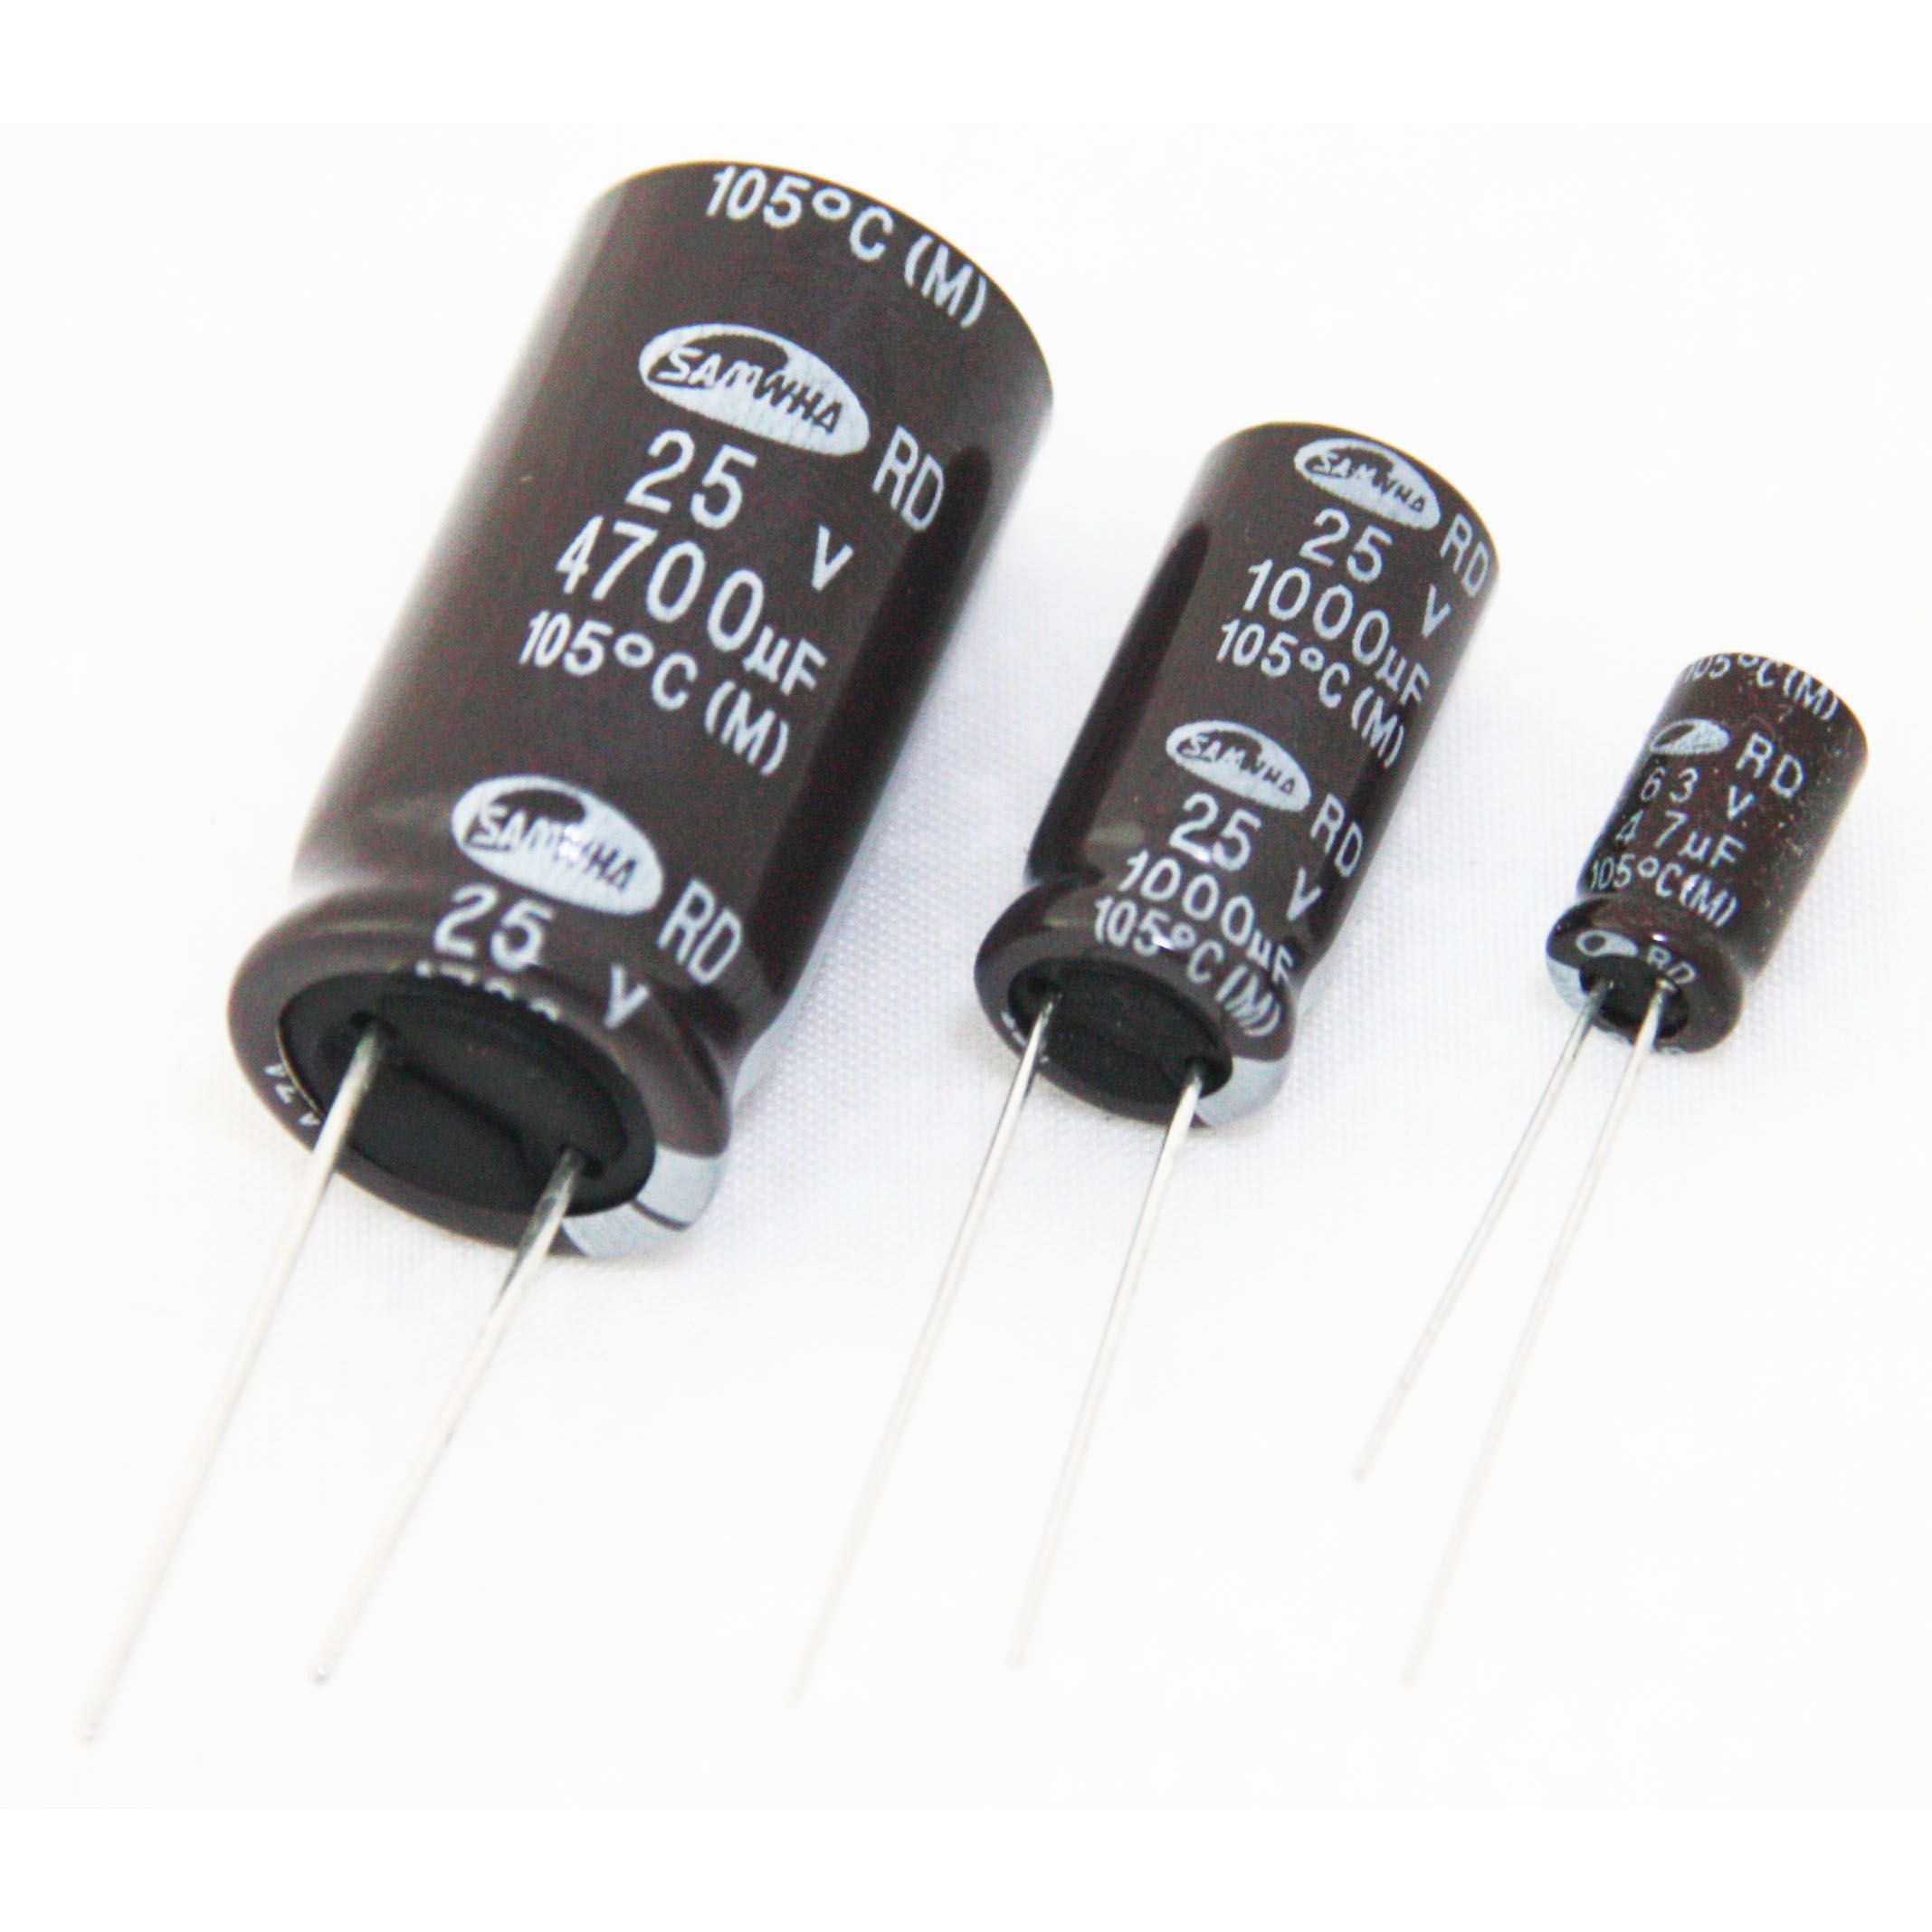 Electrolytic capacitor 105° 4700uF-25V